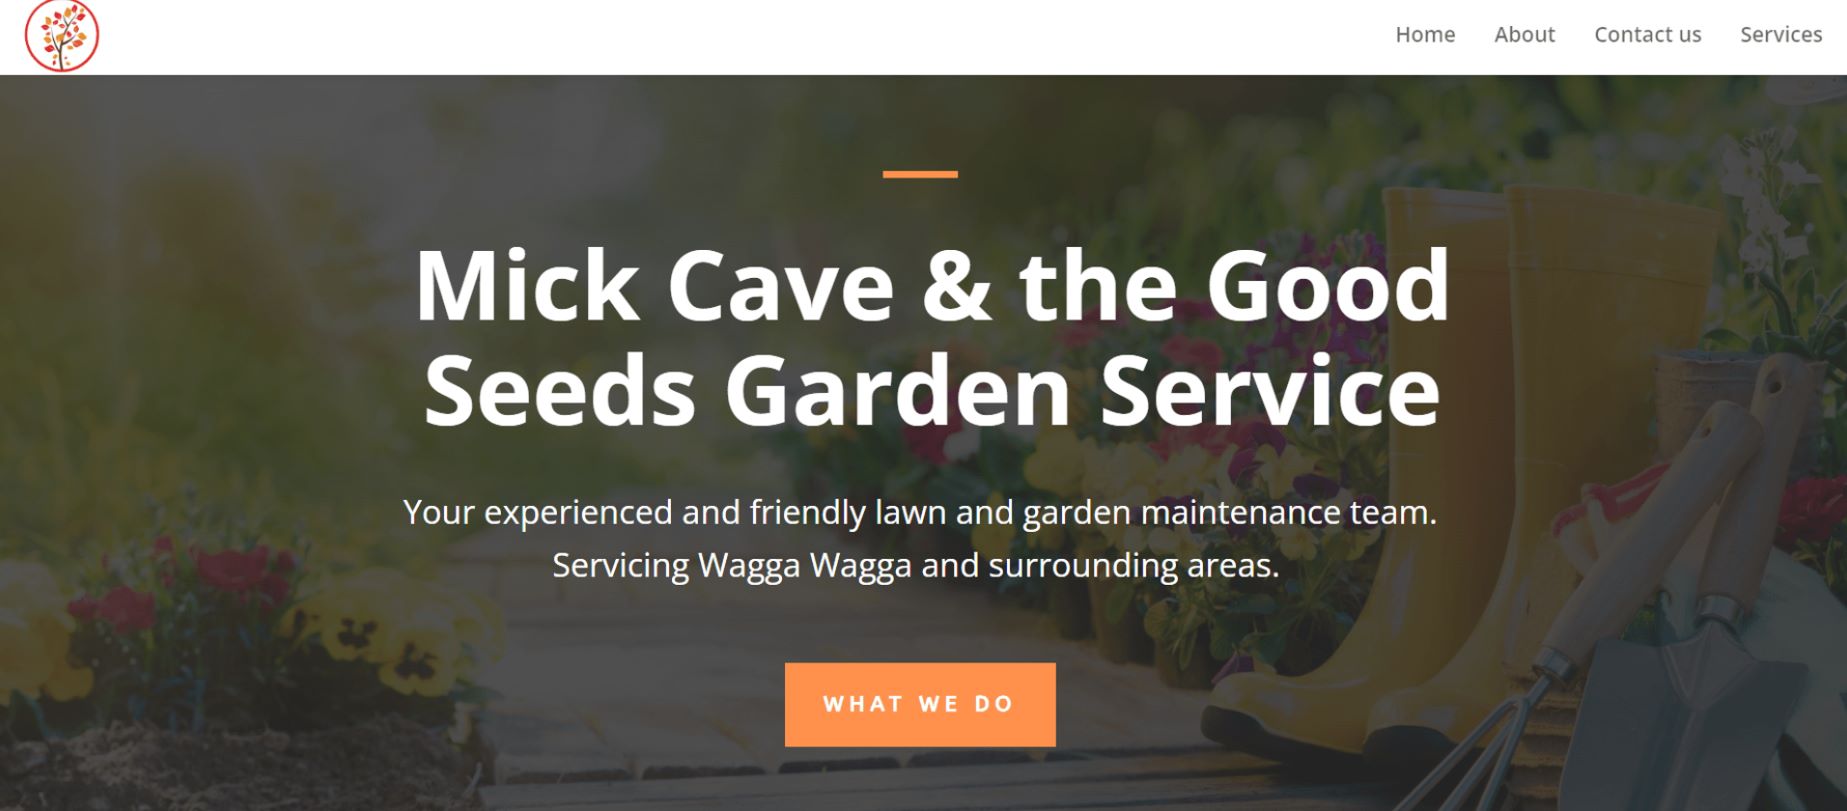 mick cave the good seeds garden service